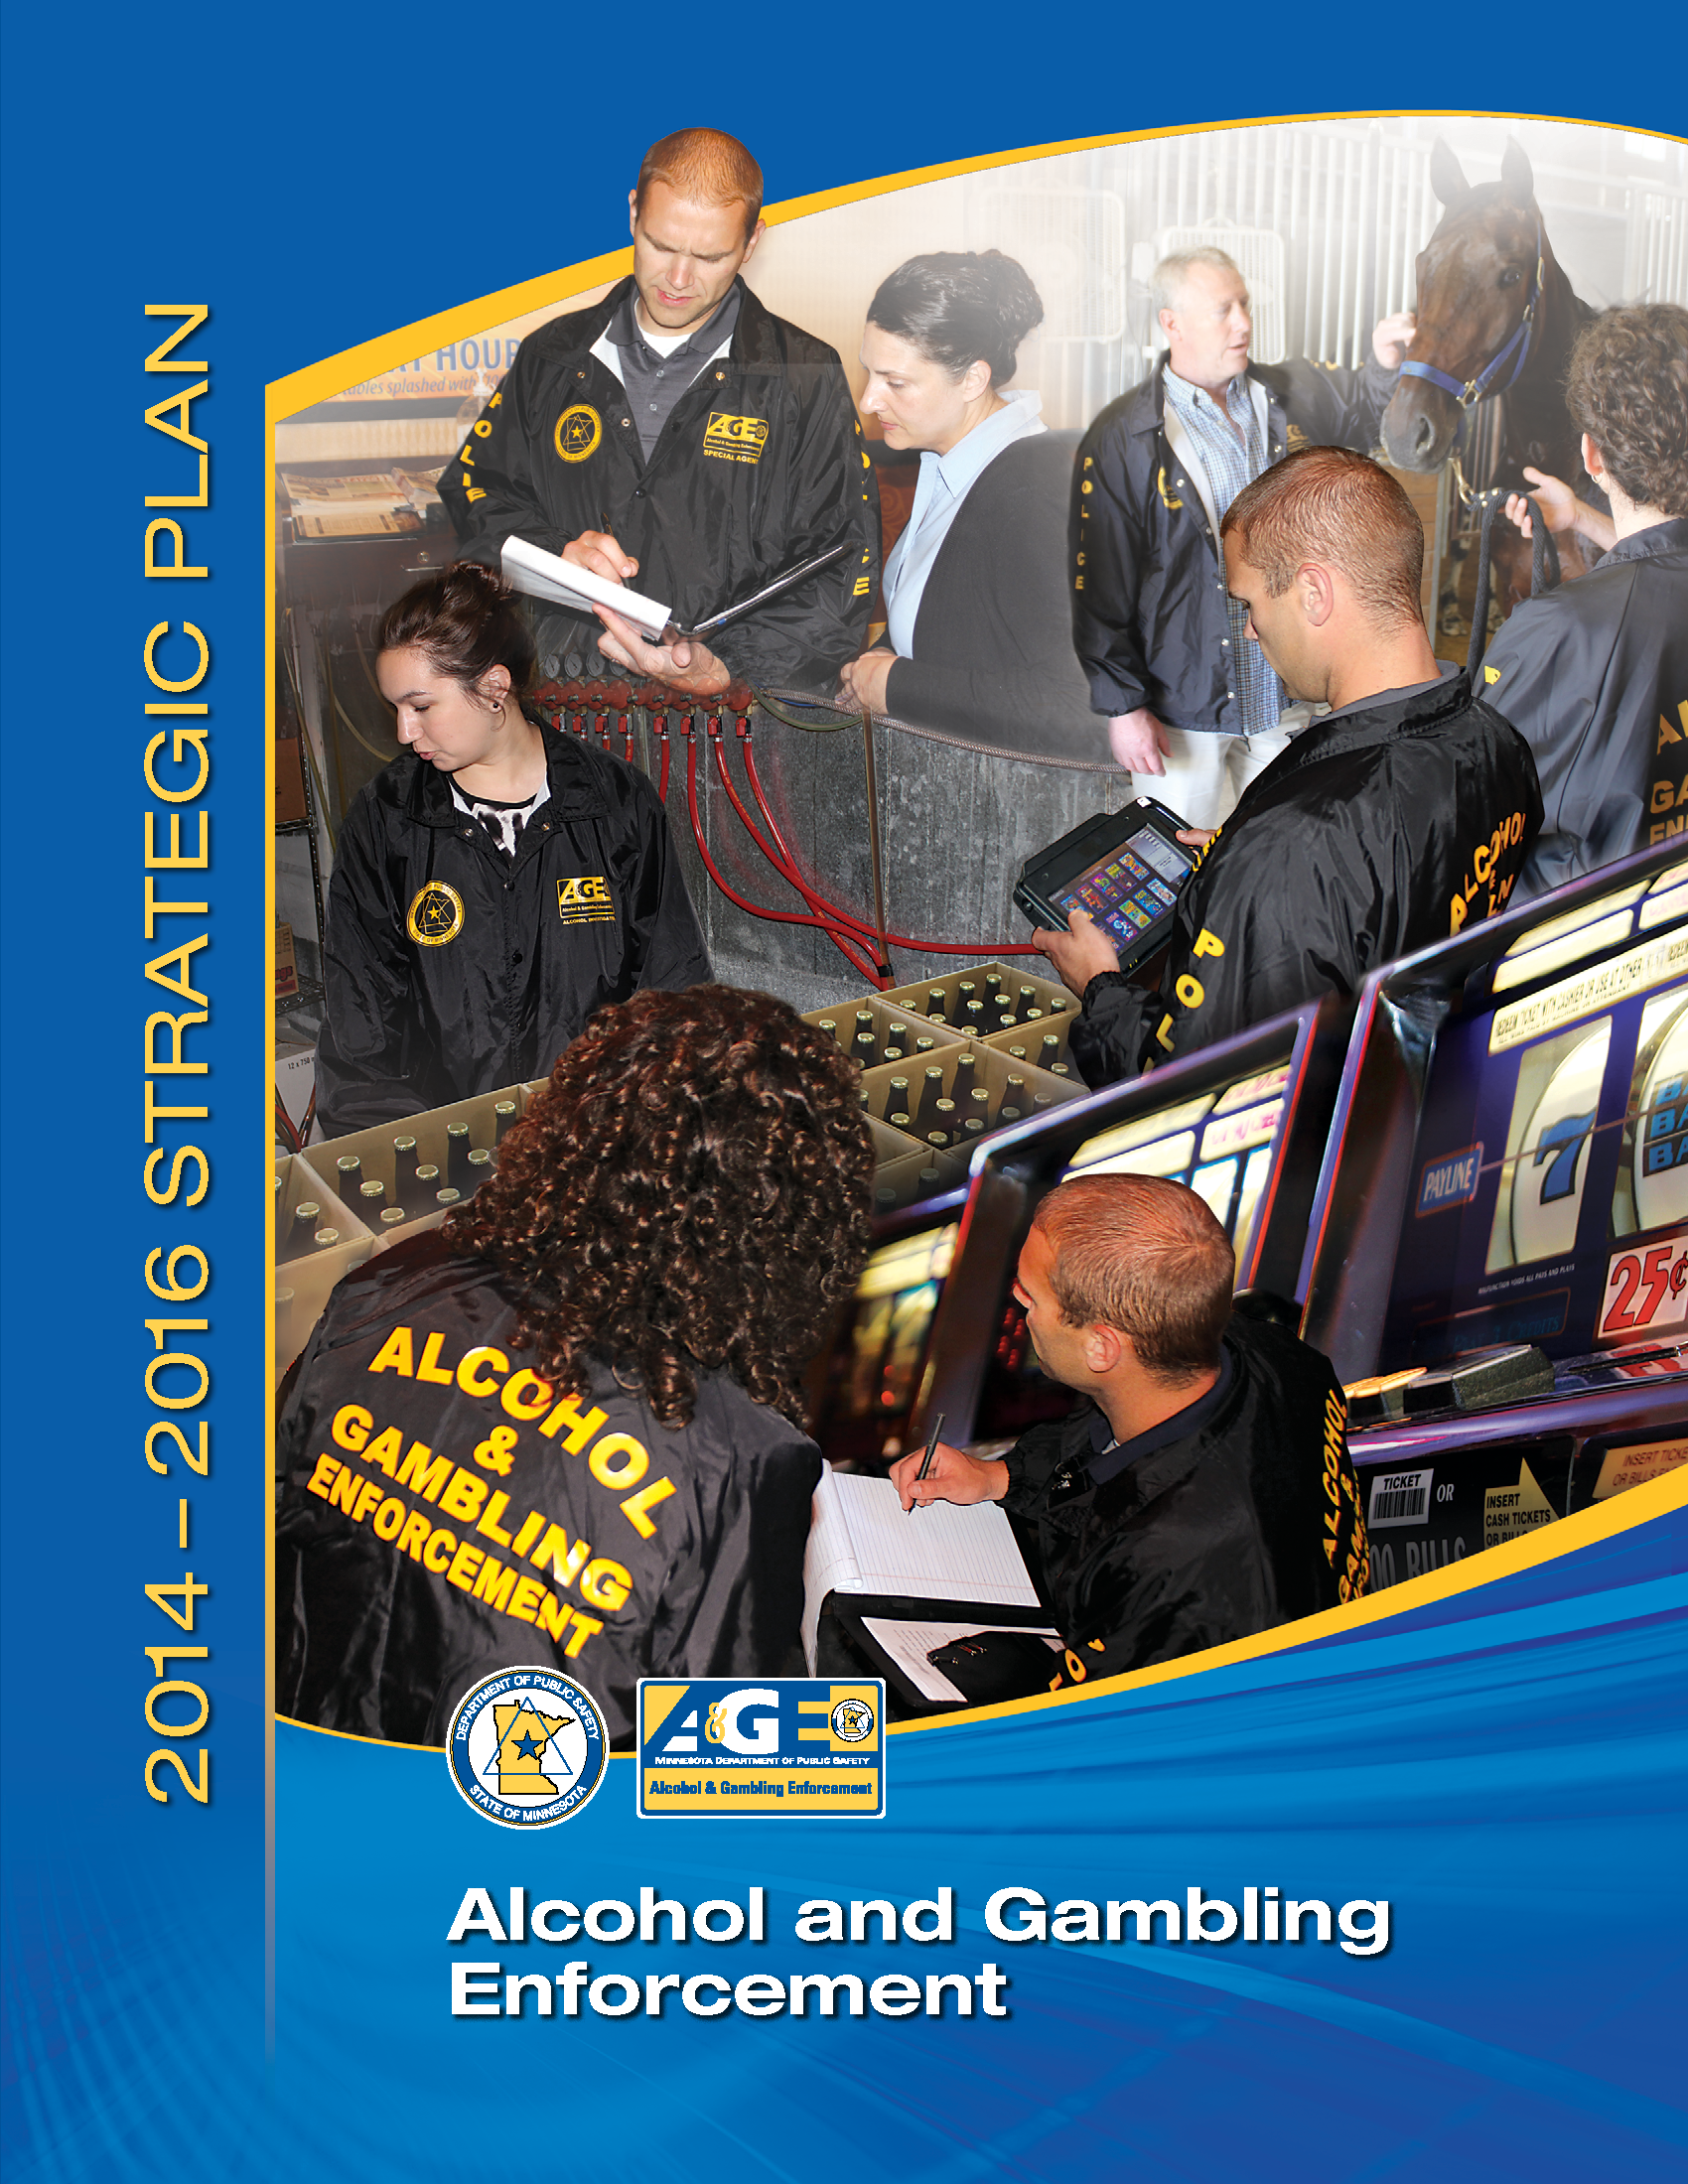 Minnesota gambling license